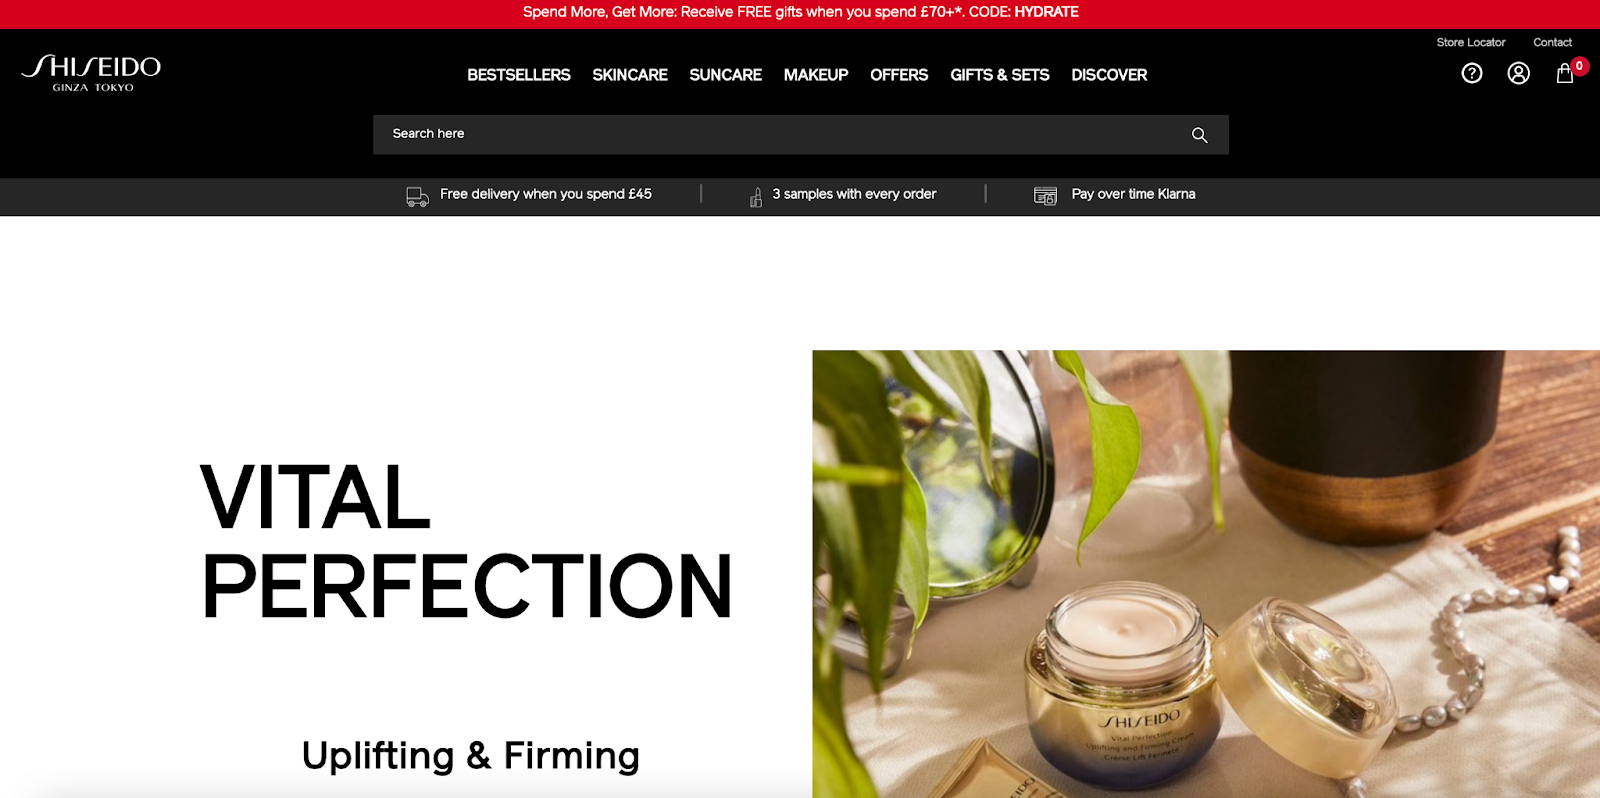 UK website homepage for Shiseido, the Japanese cosmetics company.